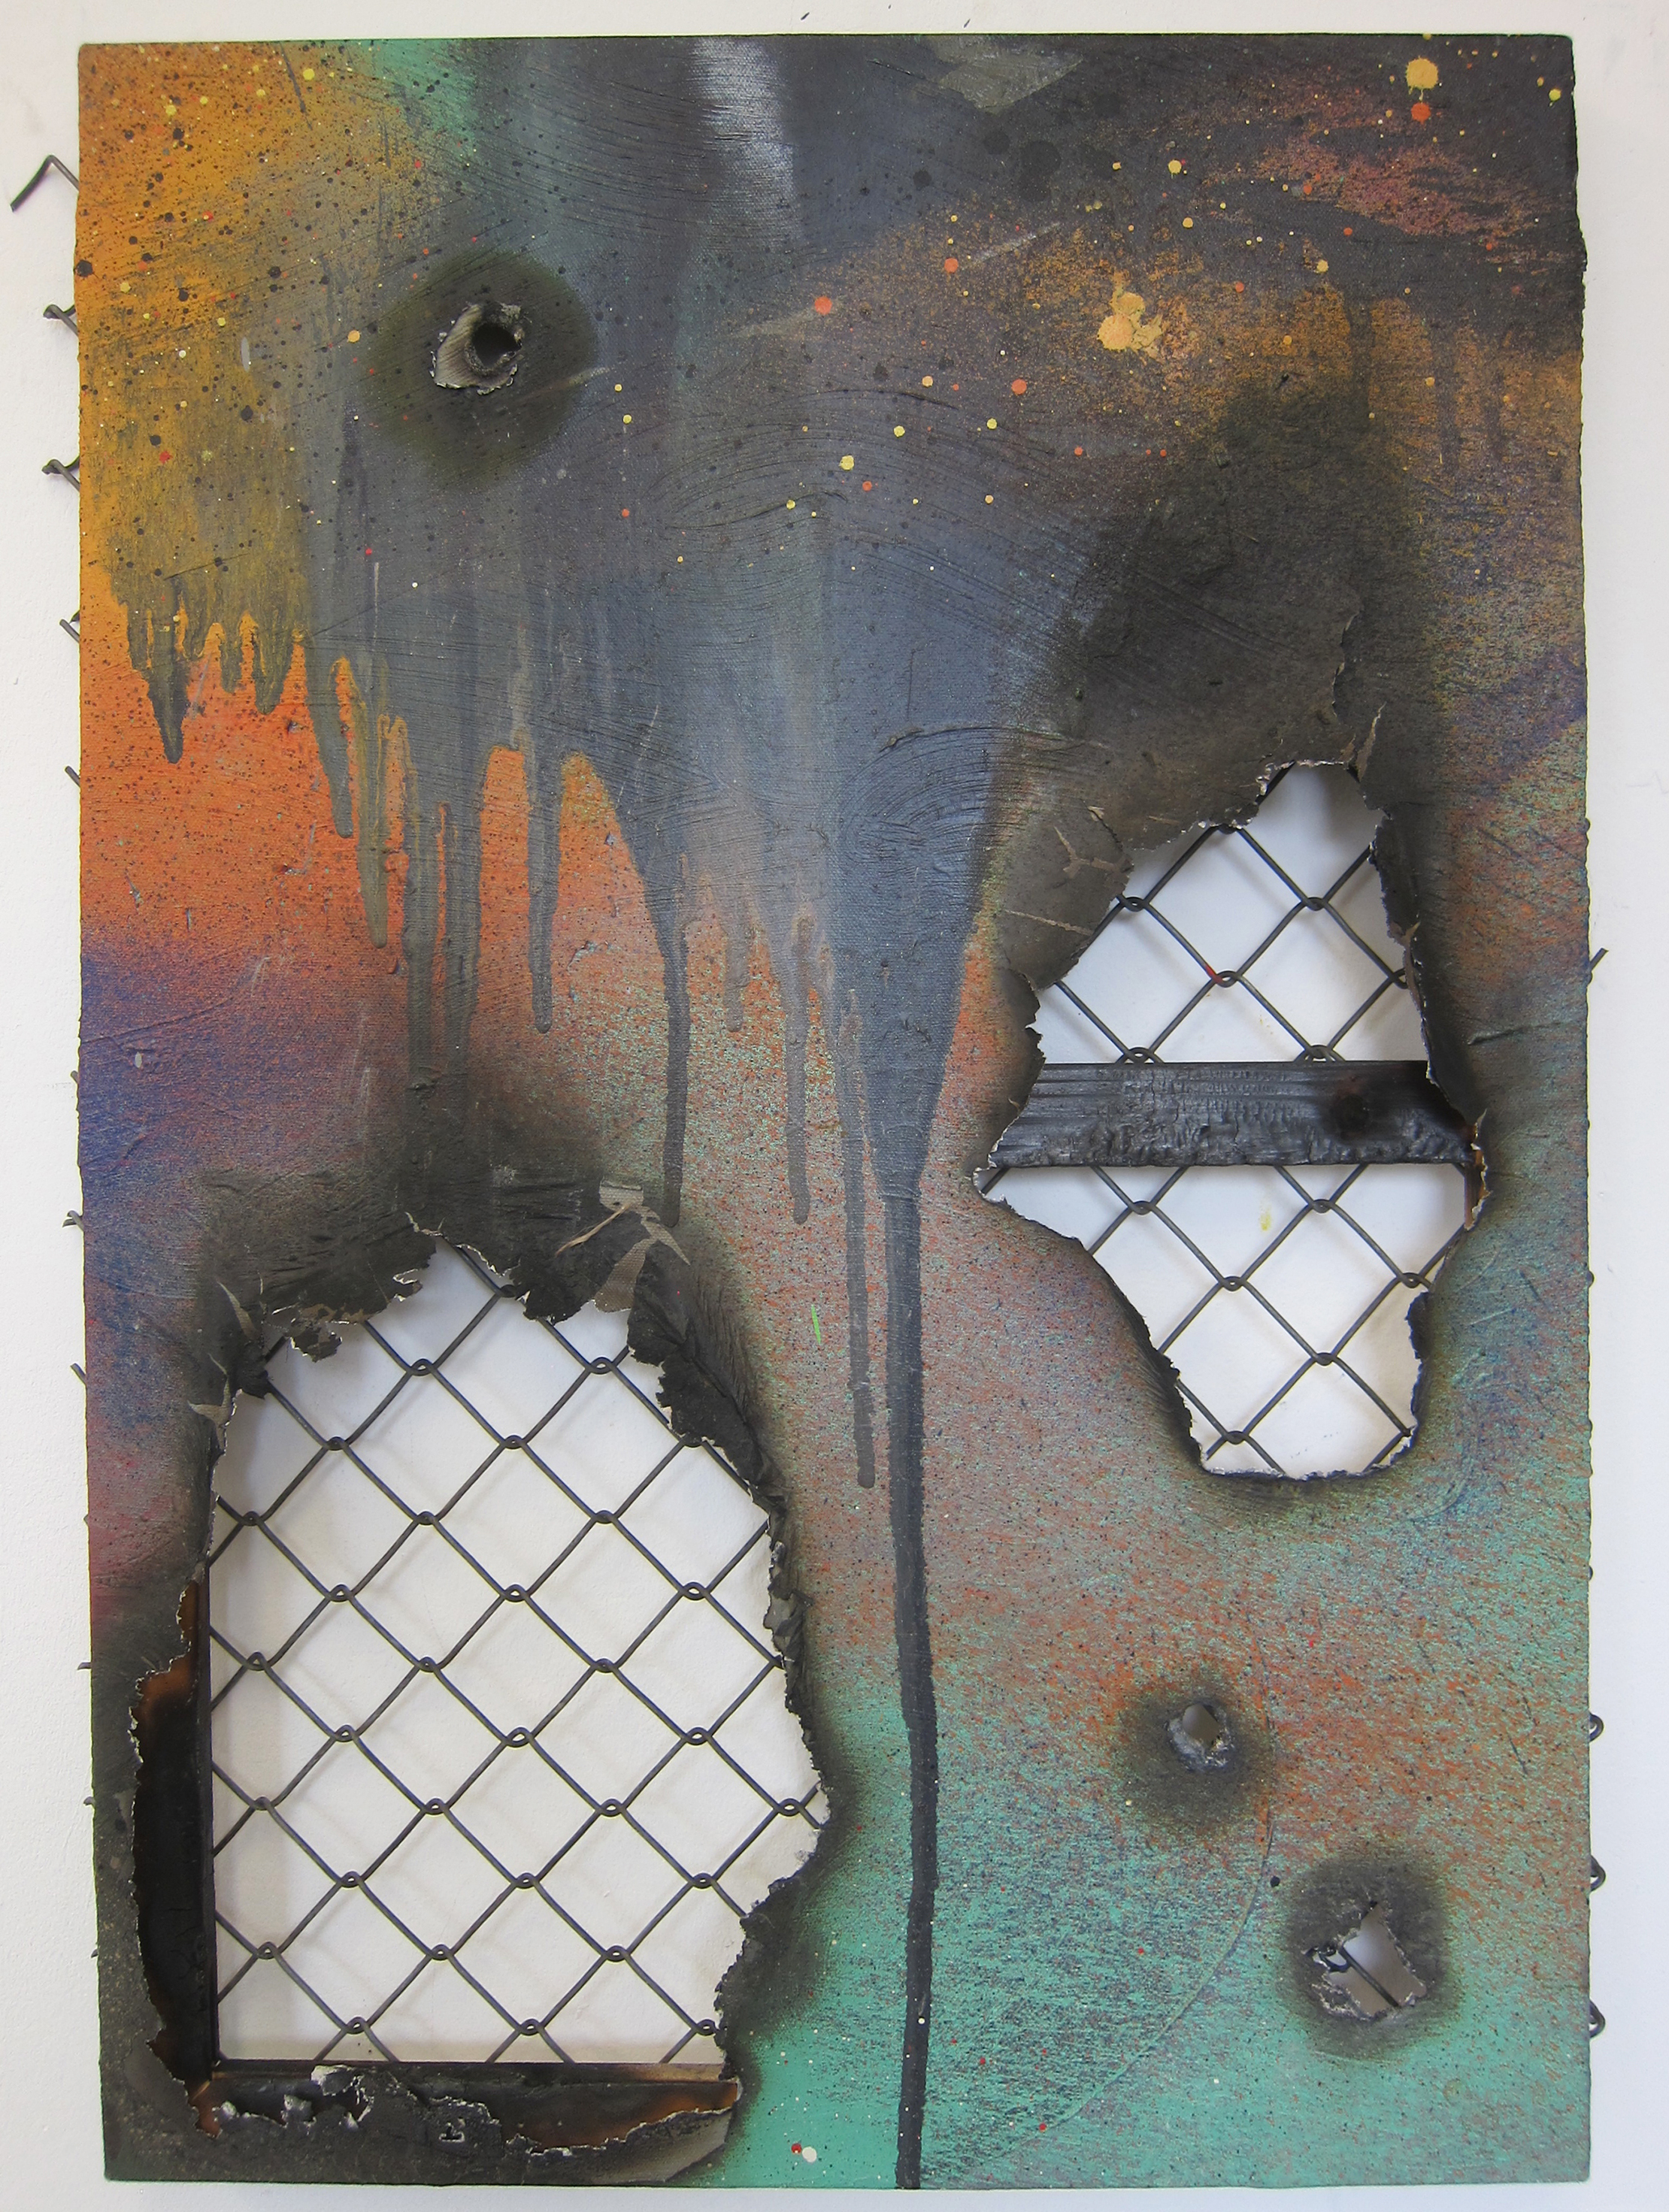   Bumpkin Zoo 001.   Alkyd resin, oil, fire, fence, and canvas.&nbsp;  76 x 50 cm.&nbsp;  2015. 